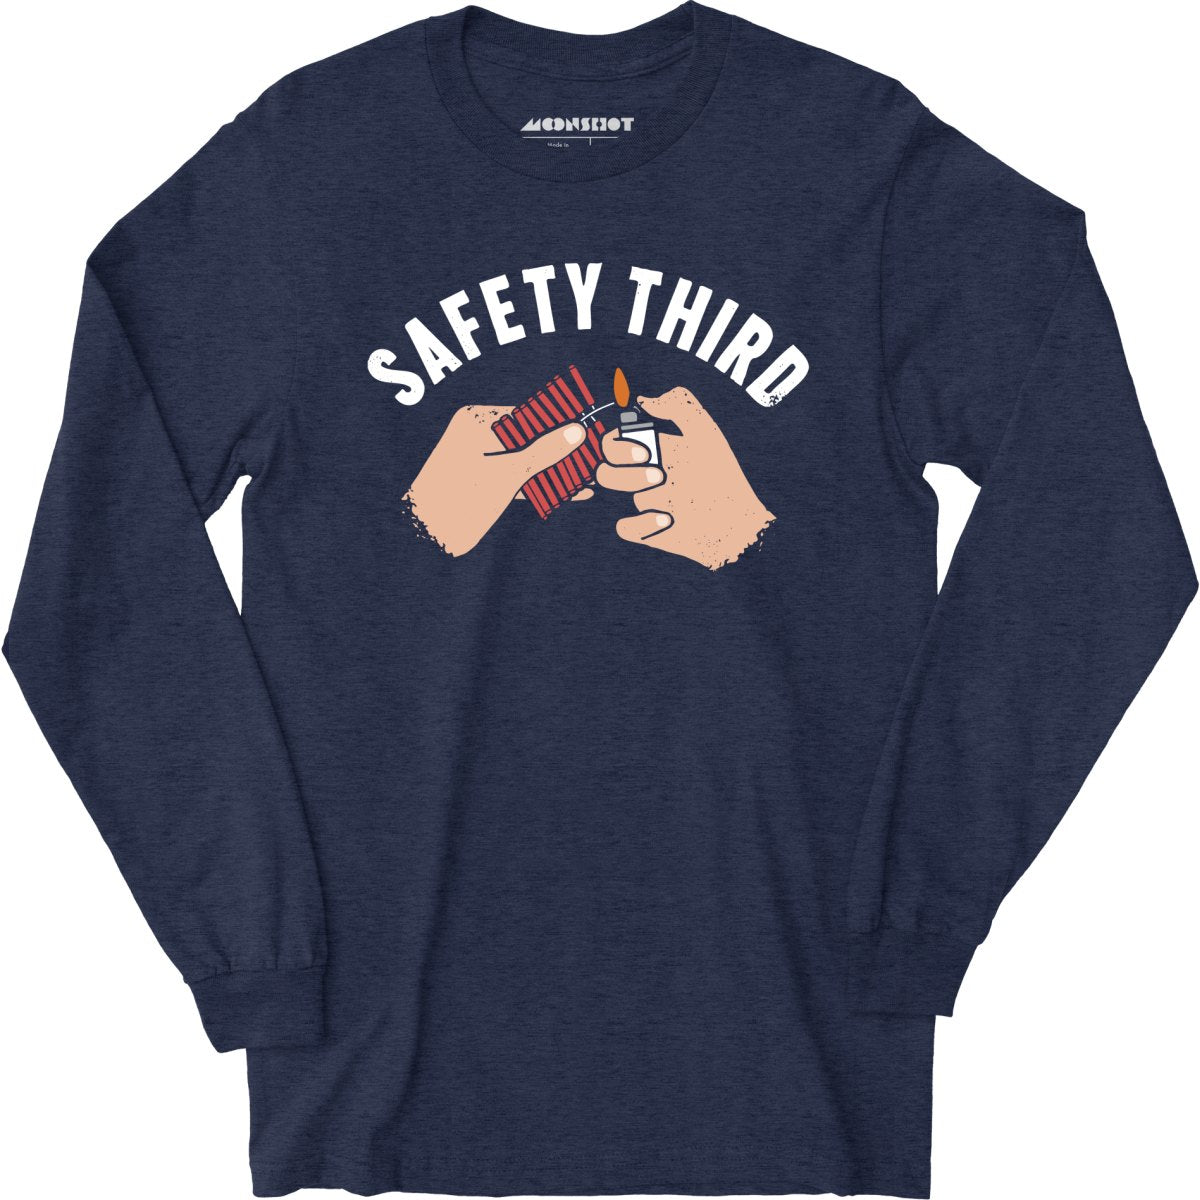 Safety Third - Long Sleeve T-Shirt